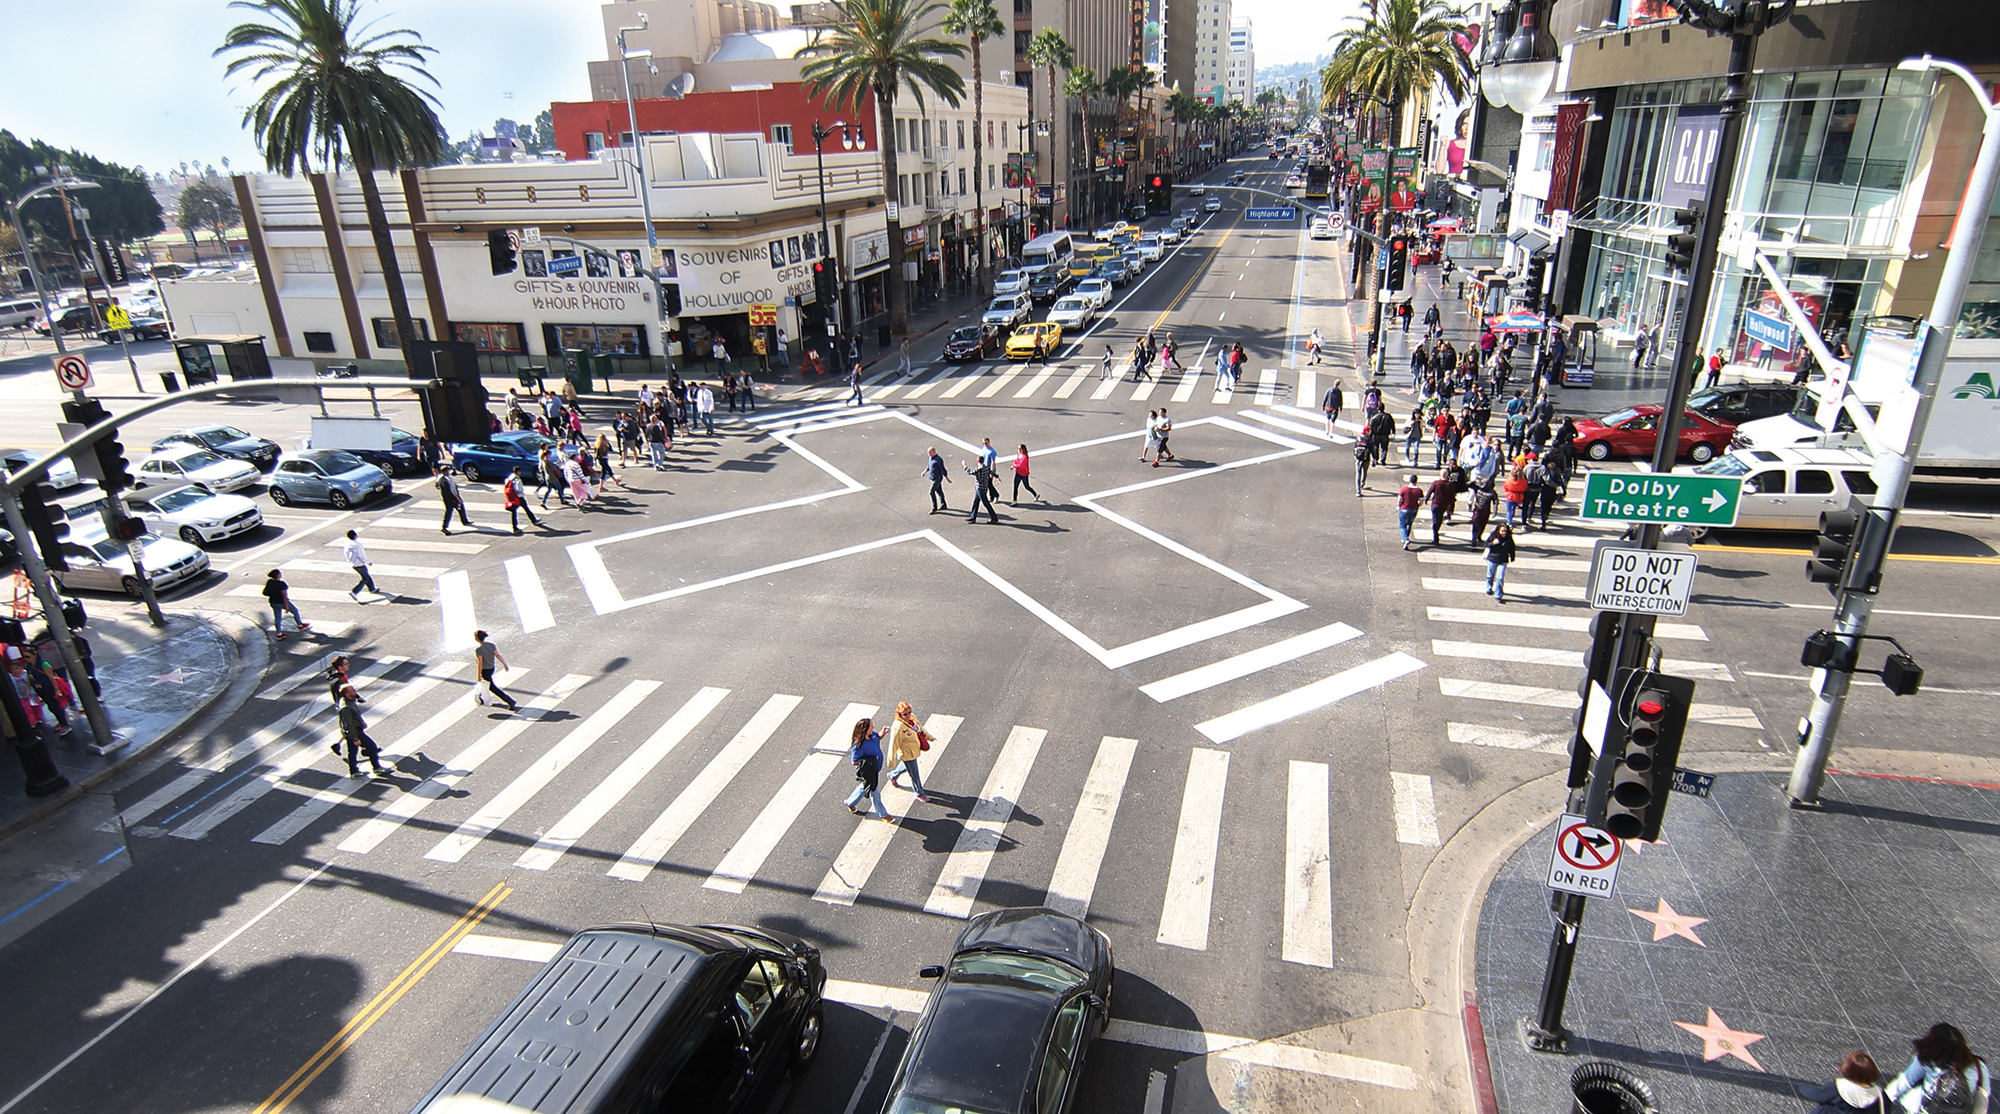 Hollywood scramble crosswalk